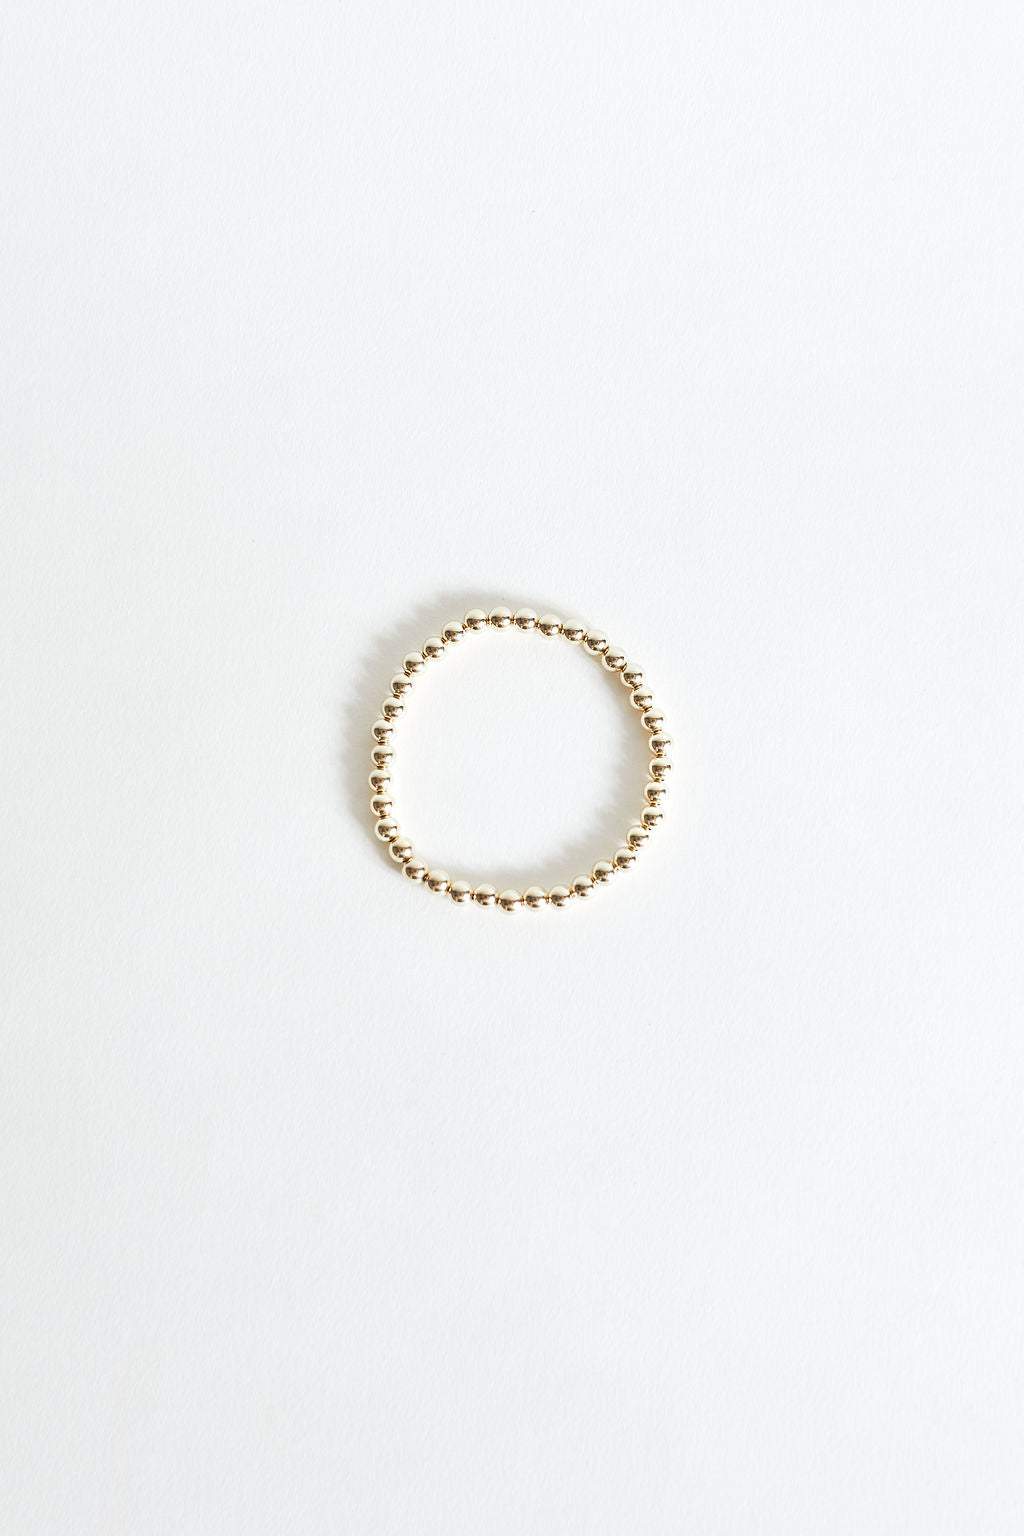 Nala Gold-Filled Beaded Bracelet - Large